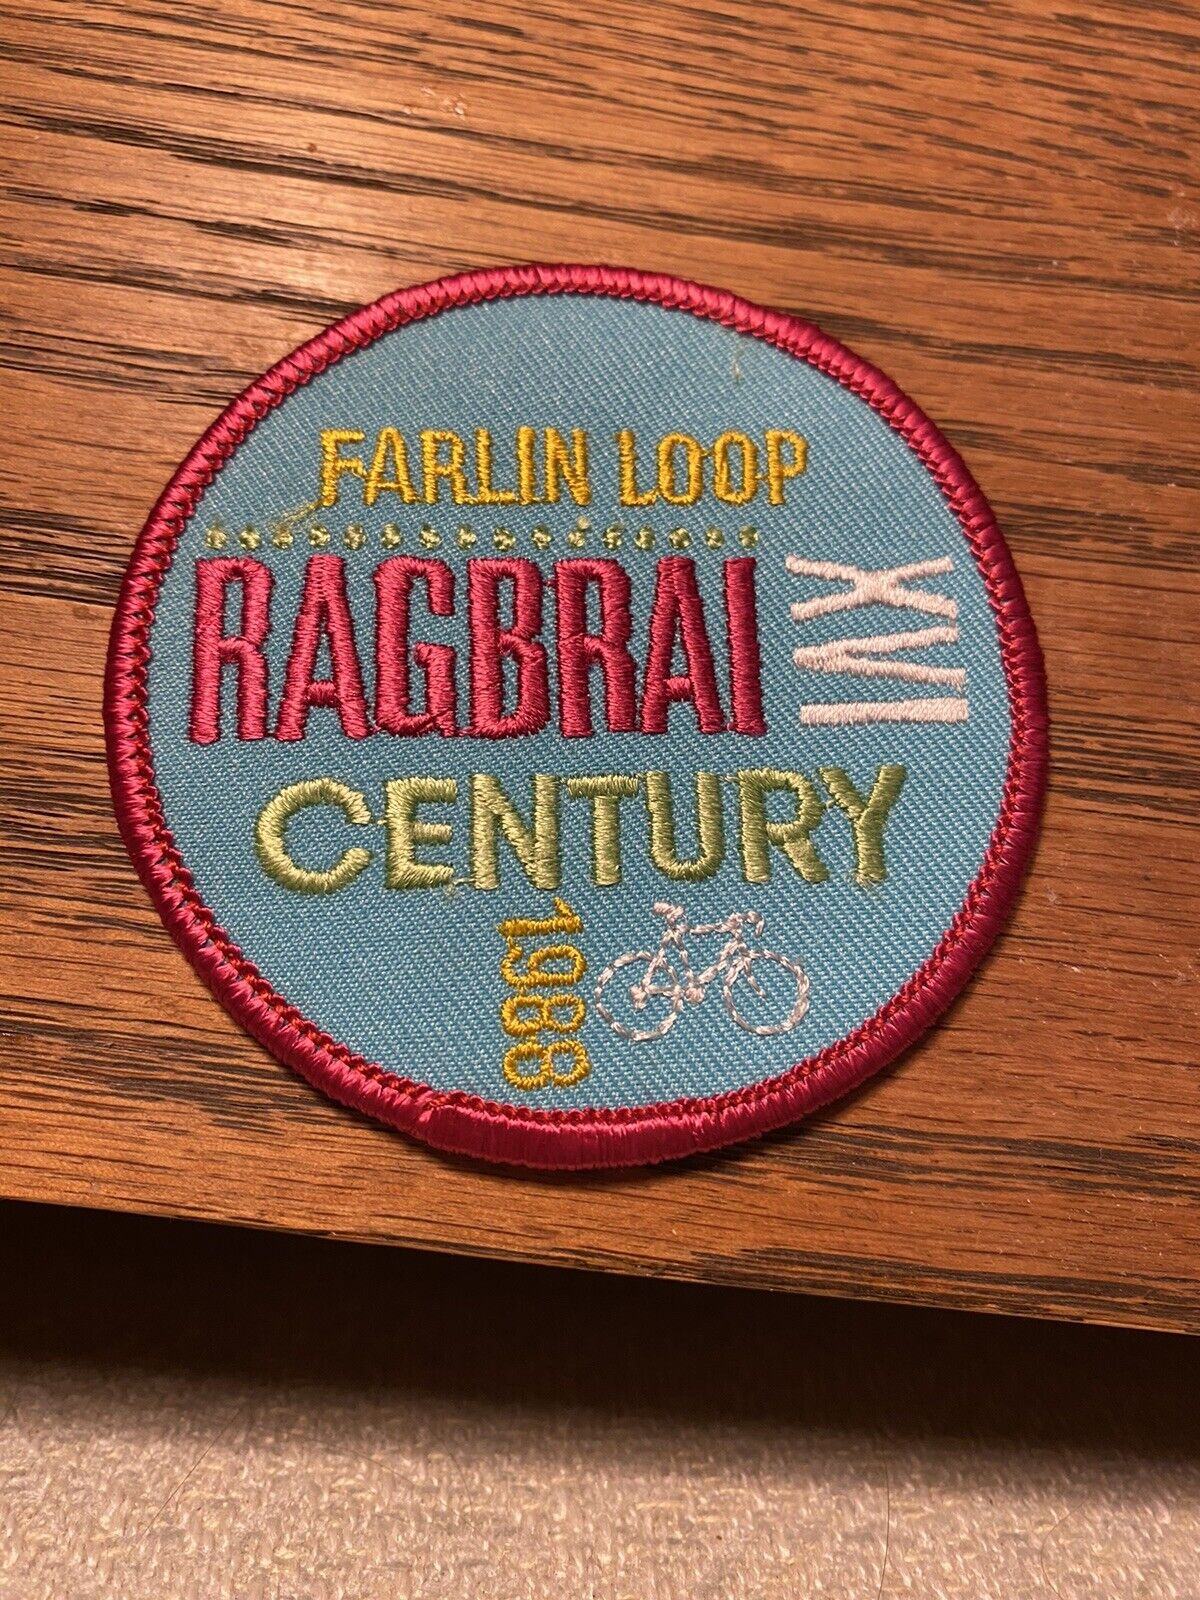 1988 RAGBRAI XVI Patch  Farlin Loop, RAGBRAI Century Patch